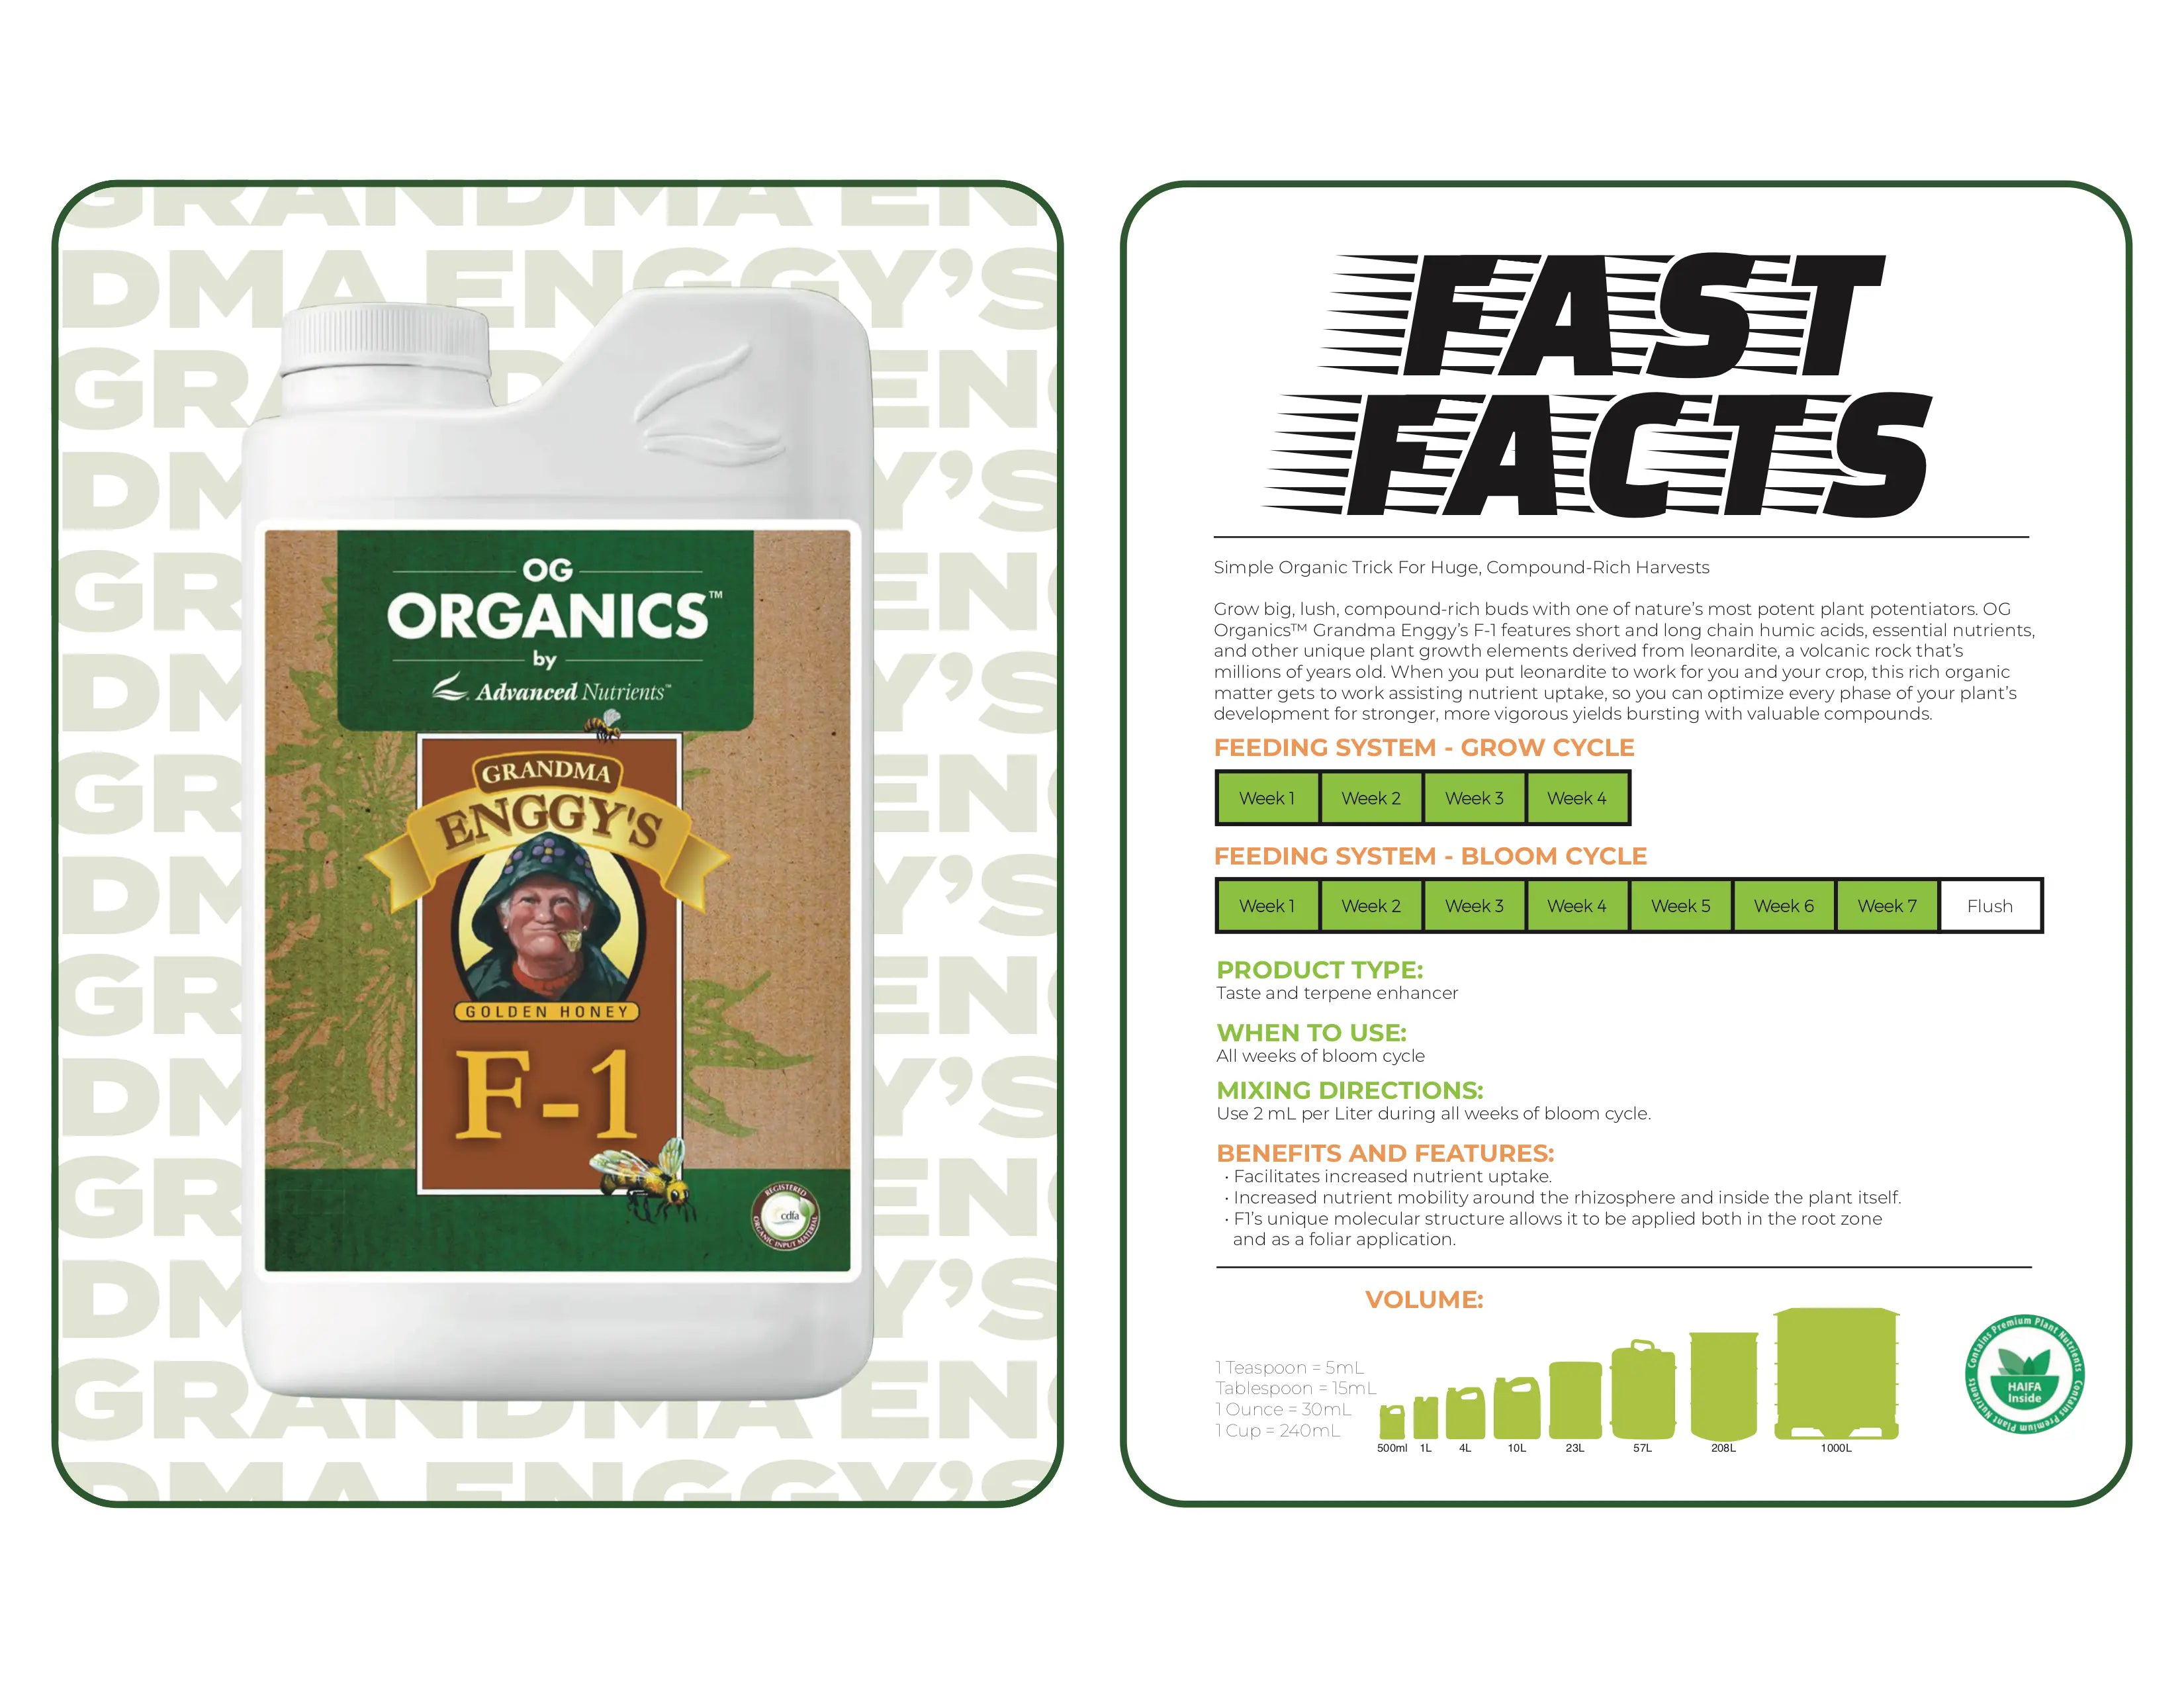 Advanced Nutrients Grandma Enggy's F-1® OG Organics, 1L Advanced Nutrients